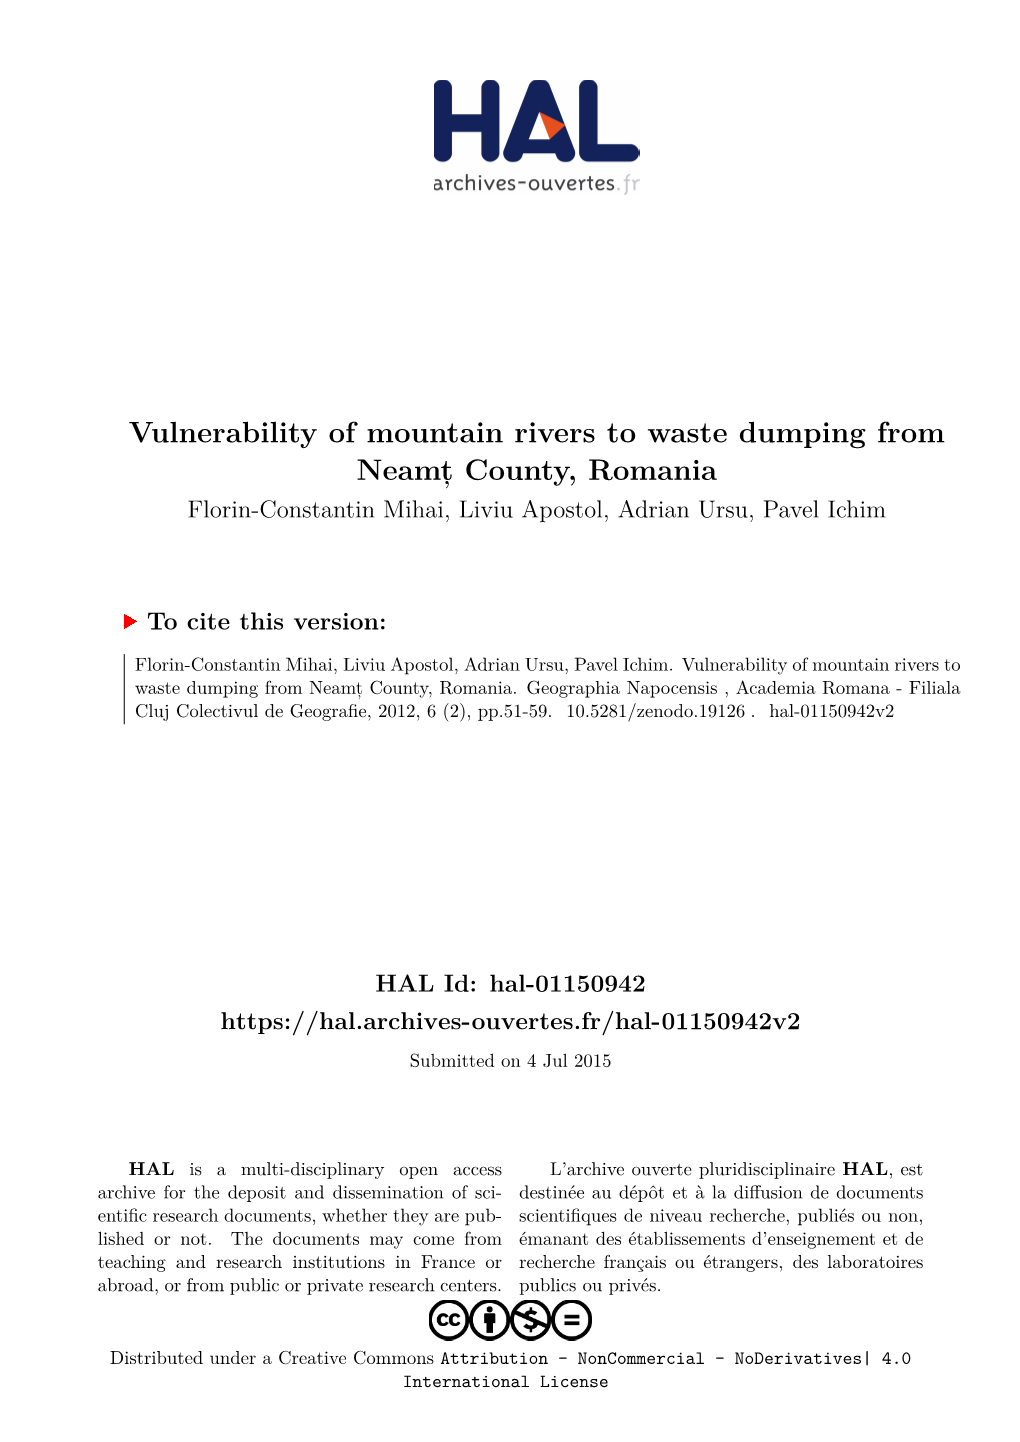 Vulnerability of Mountain Rivers to Waste Dumping from Neamț County, Romania Florin-Constantin Mihai, Liviu Apostol, Adrian Ursu, Pavel Ichim